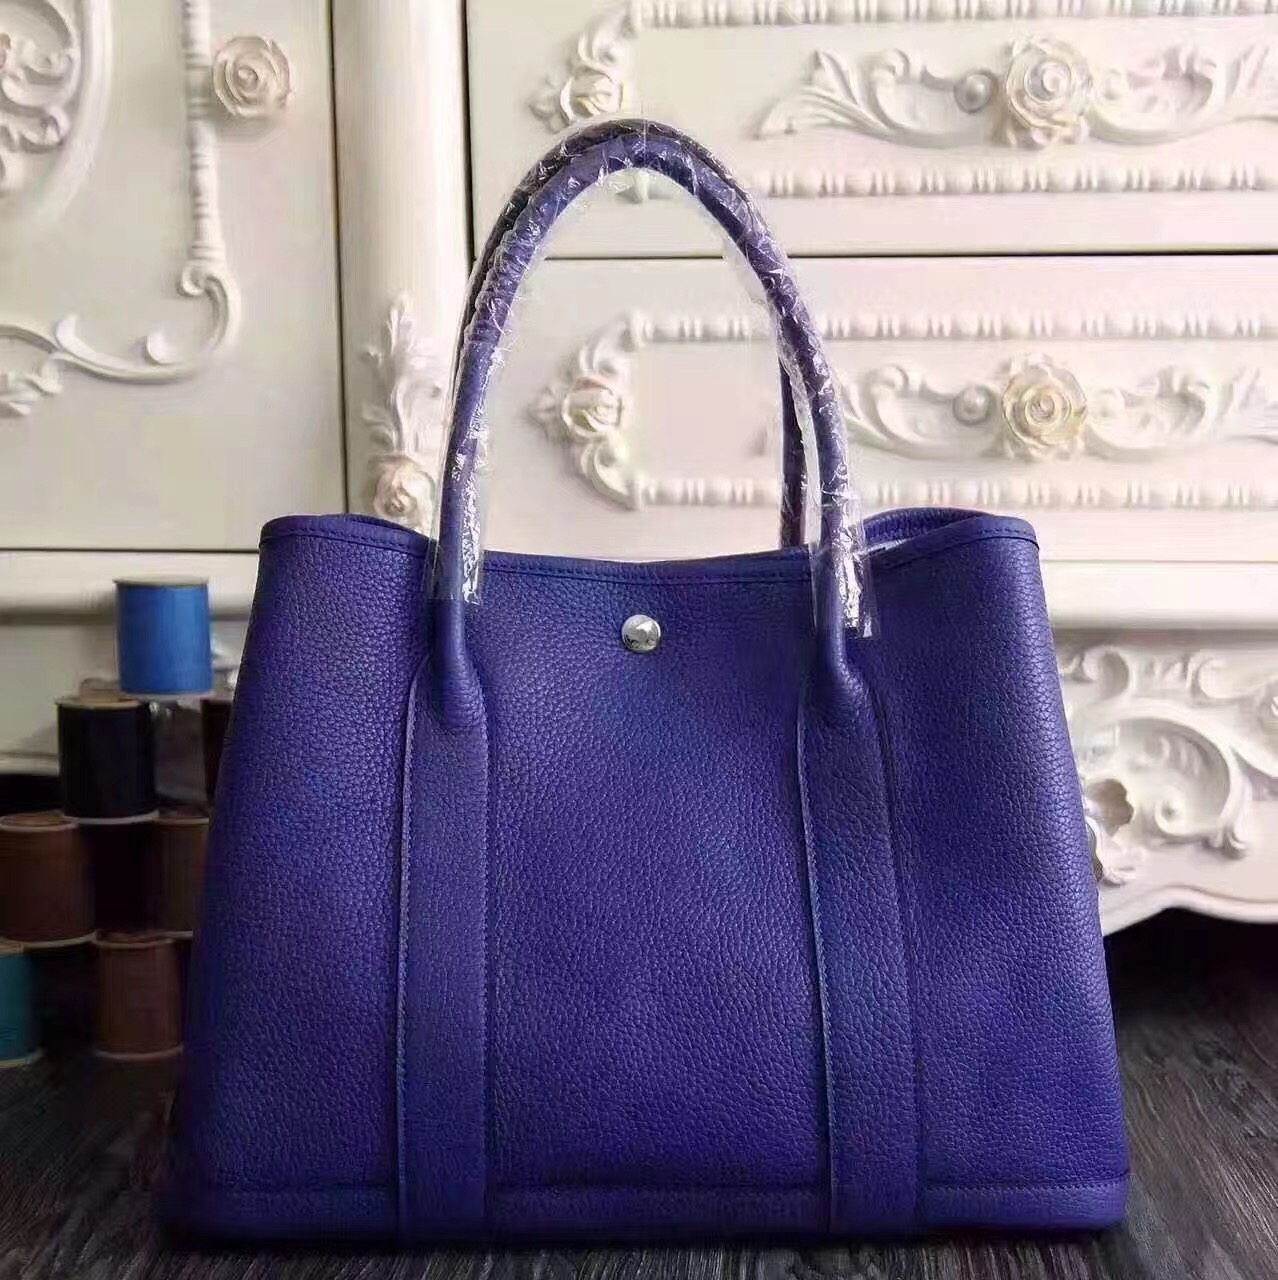 Hermes Garden Party blue top leather handbags